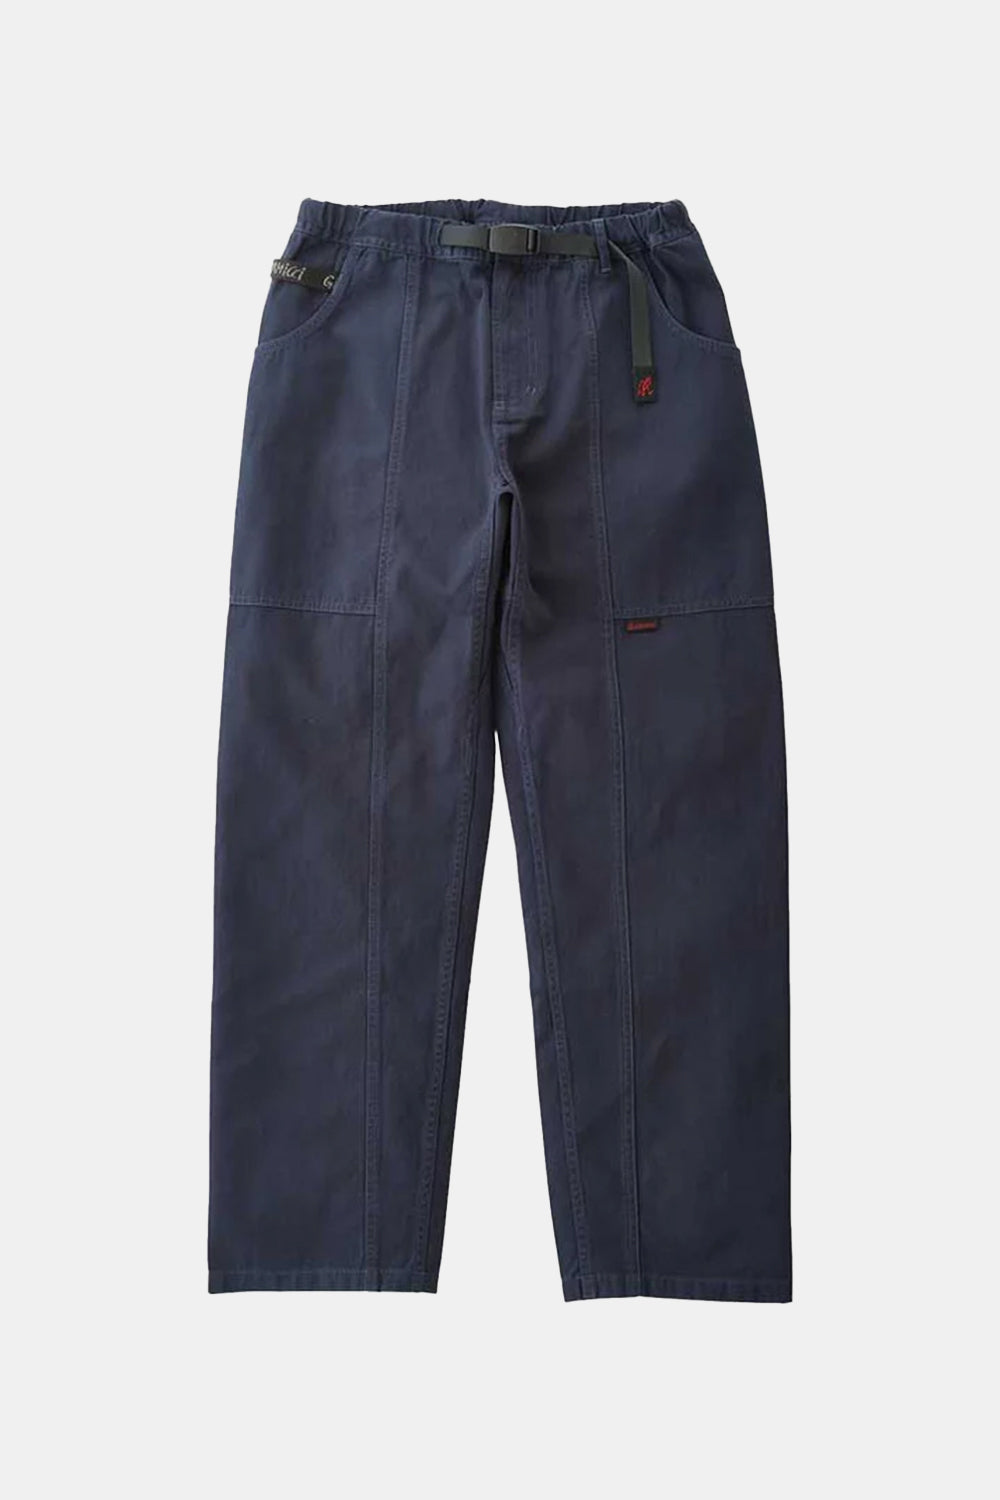 Gramicci Gadget Pants (Double Navy)